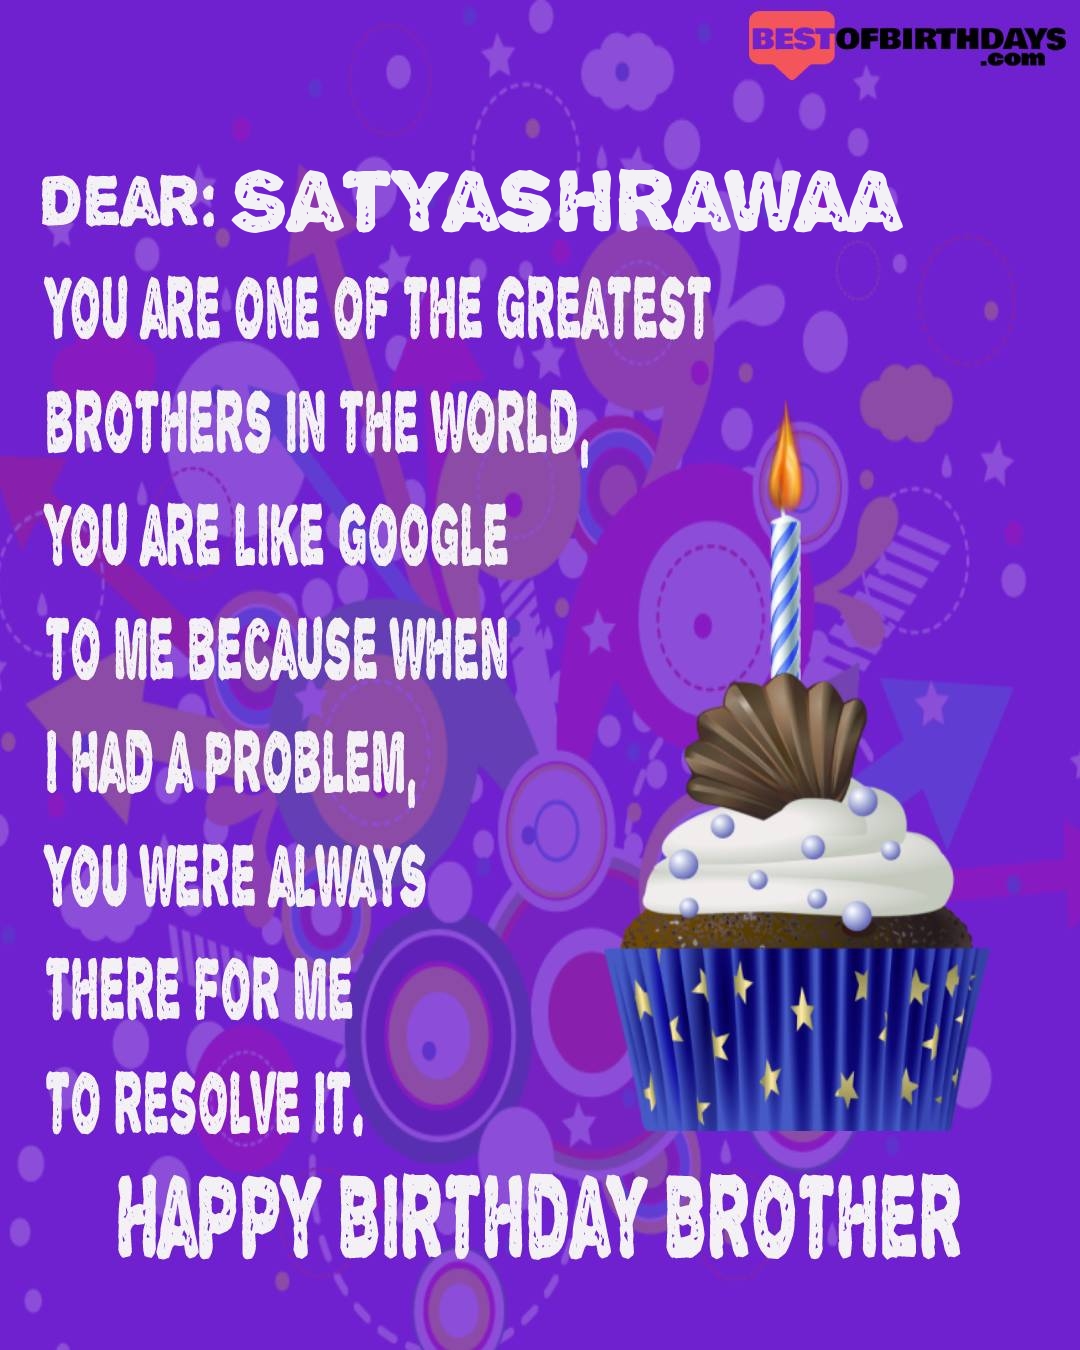 Happy birthday satyashrawaa bhai brother bro